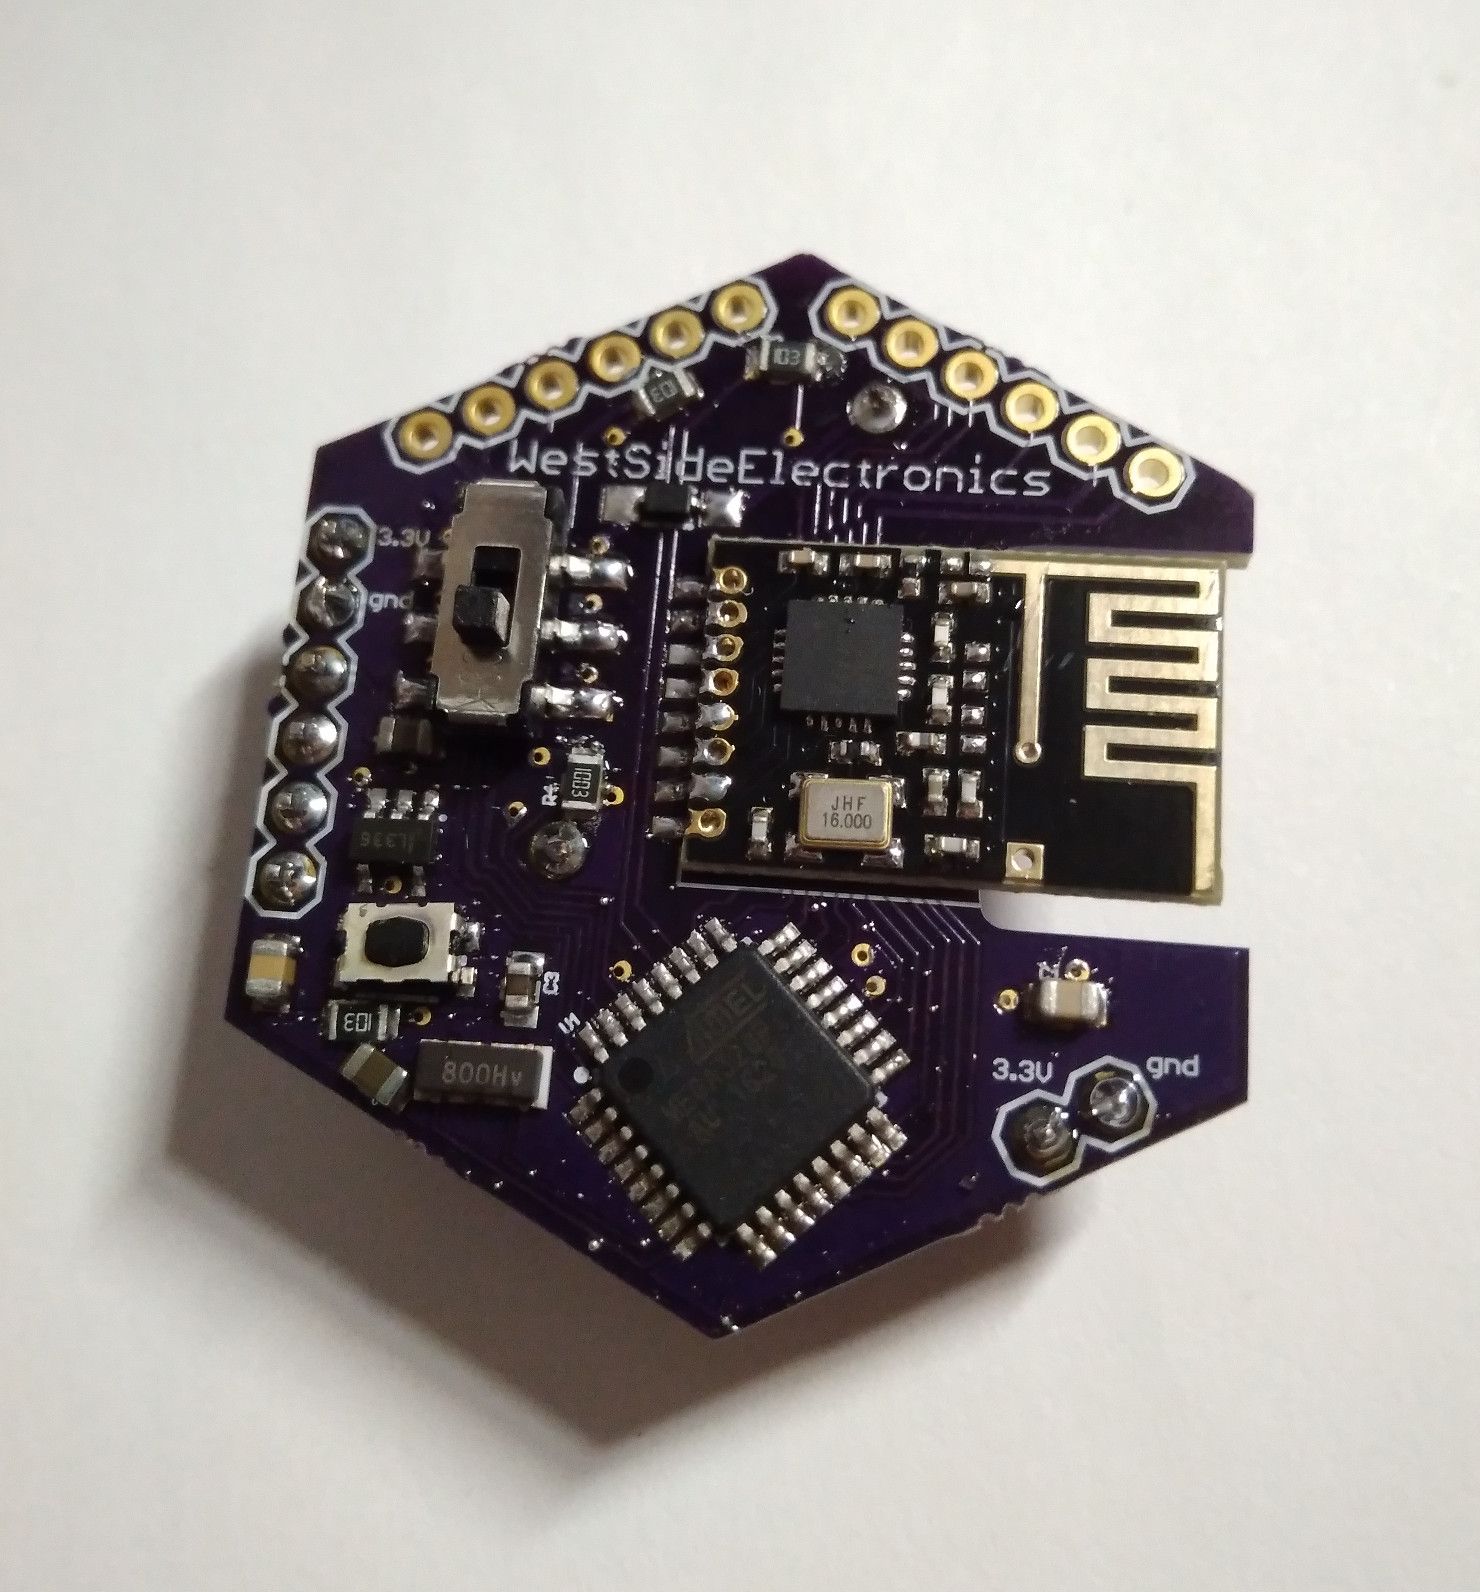 An integrated Arduino nRF24L01+ module